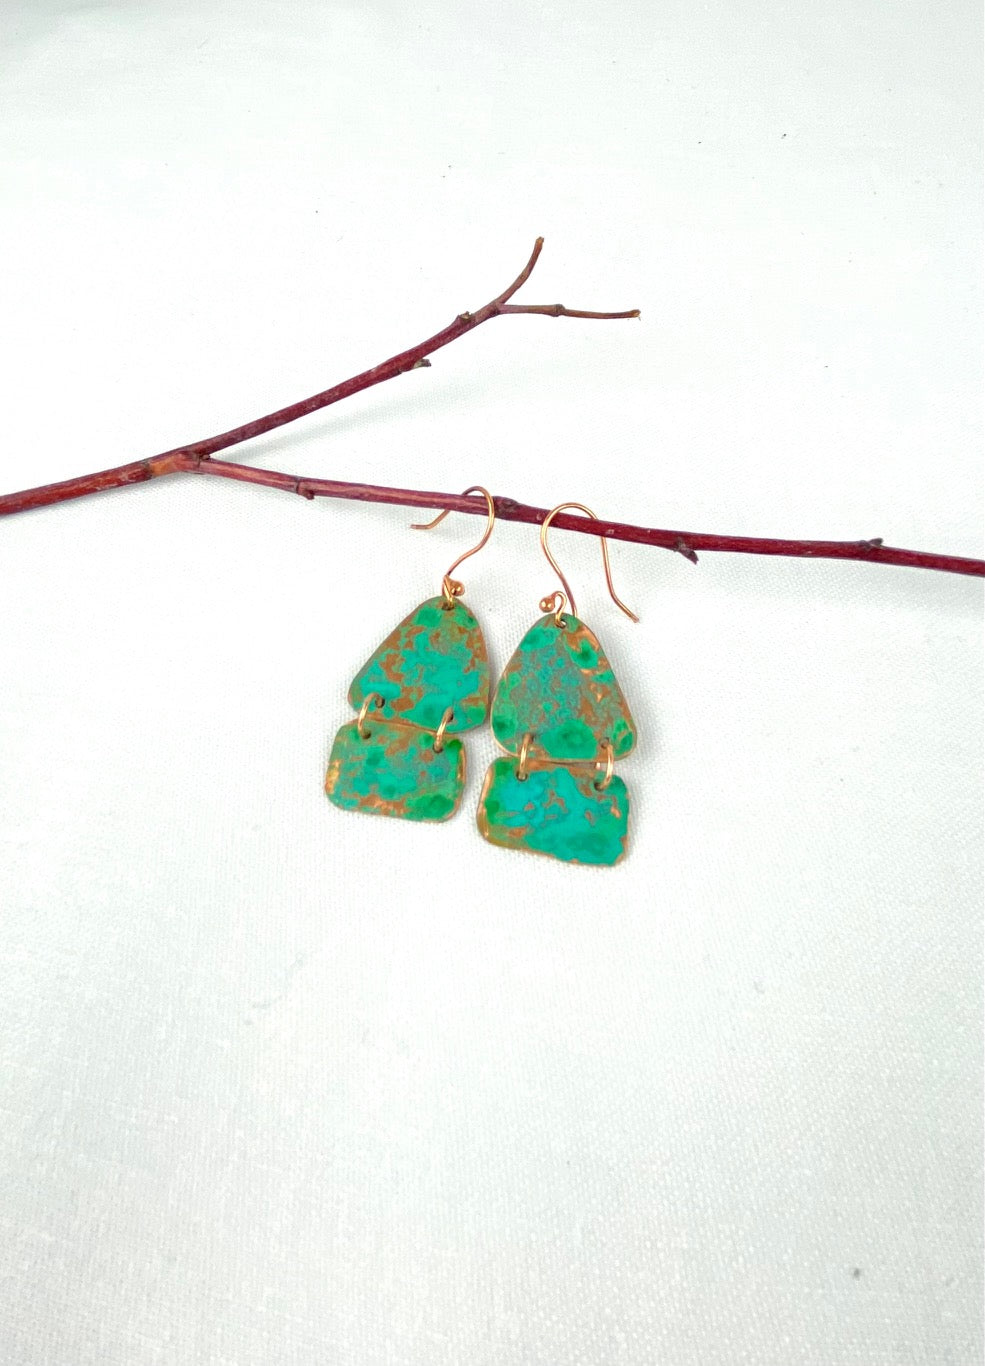 Aqua patina recycled hammered copper drop handmade earring jewelry